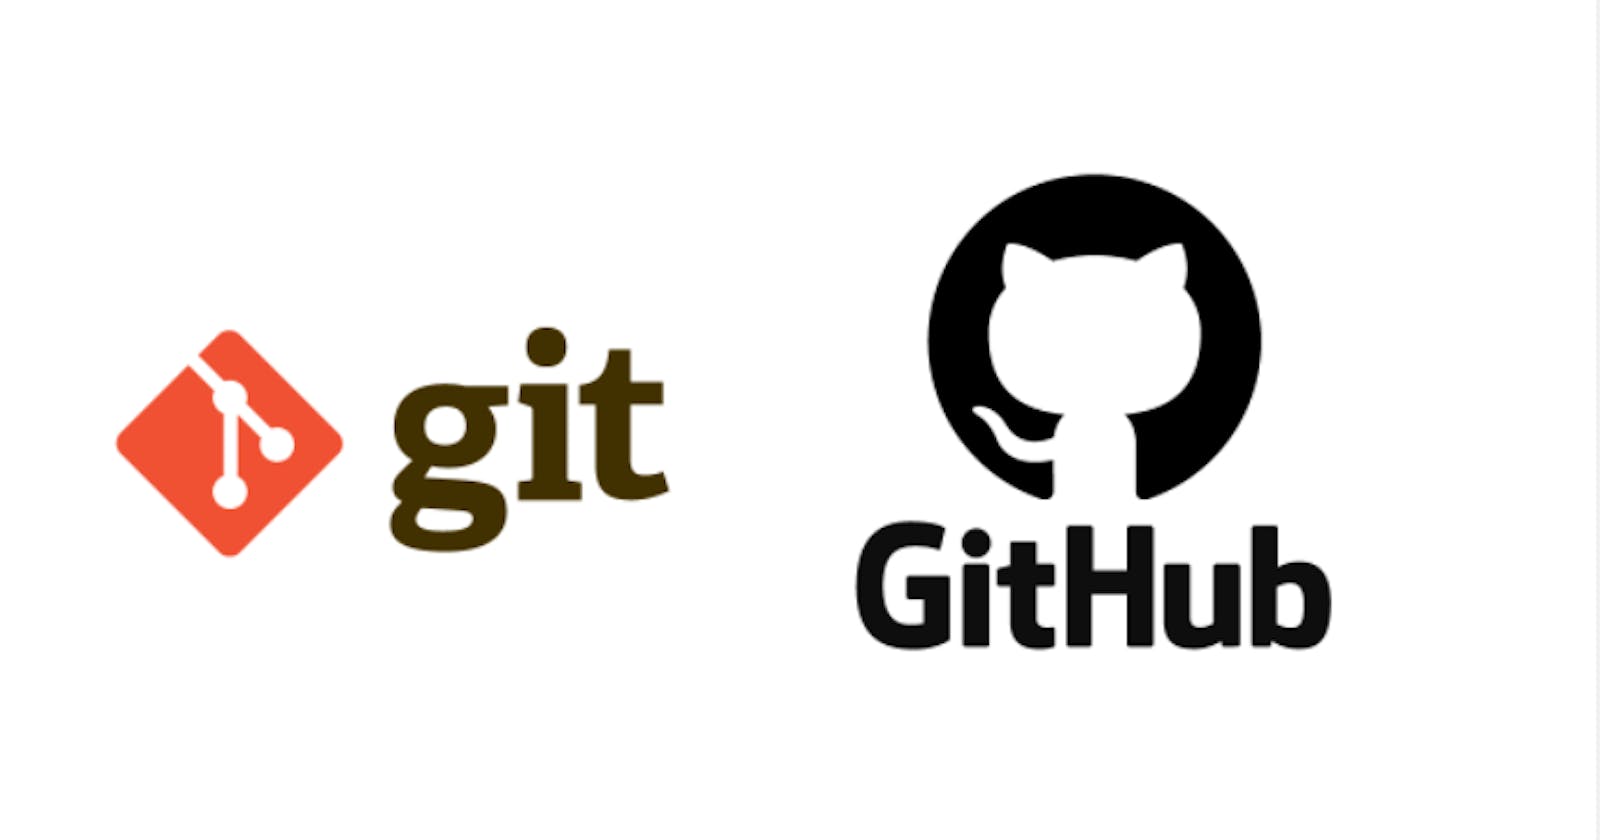 Usage of Basic Git commands and Github